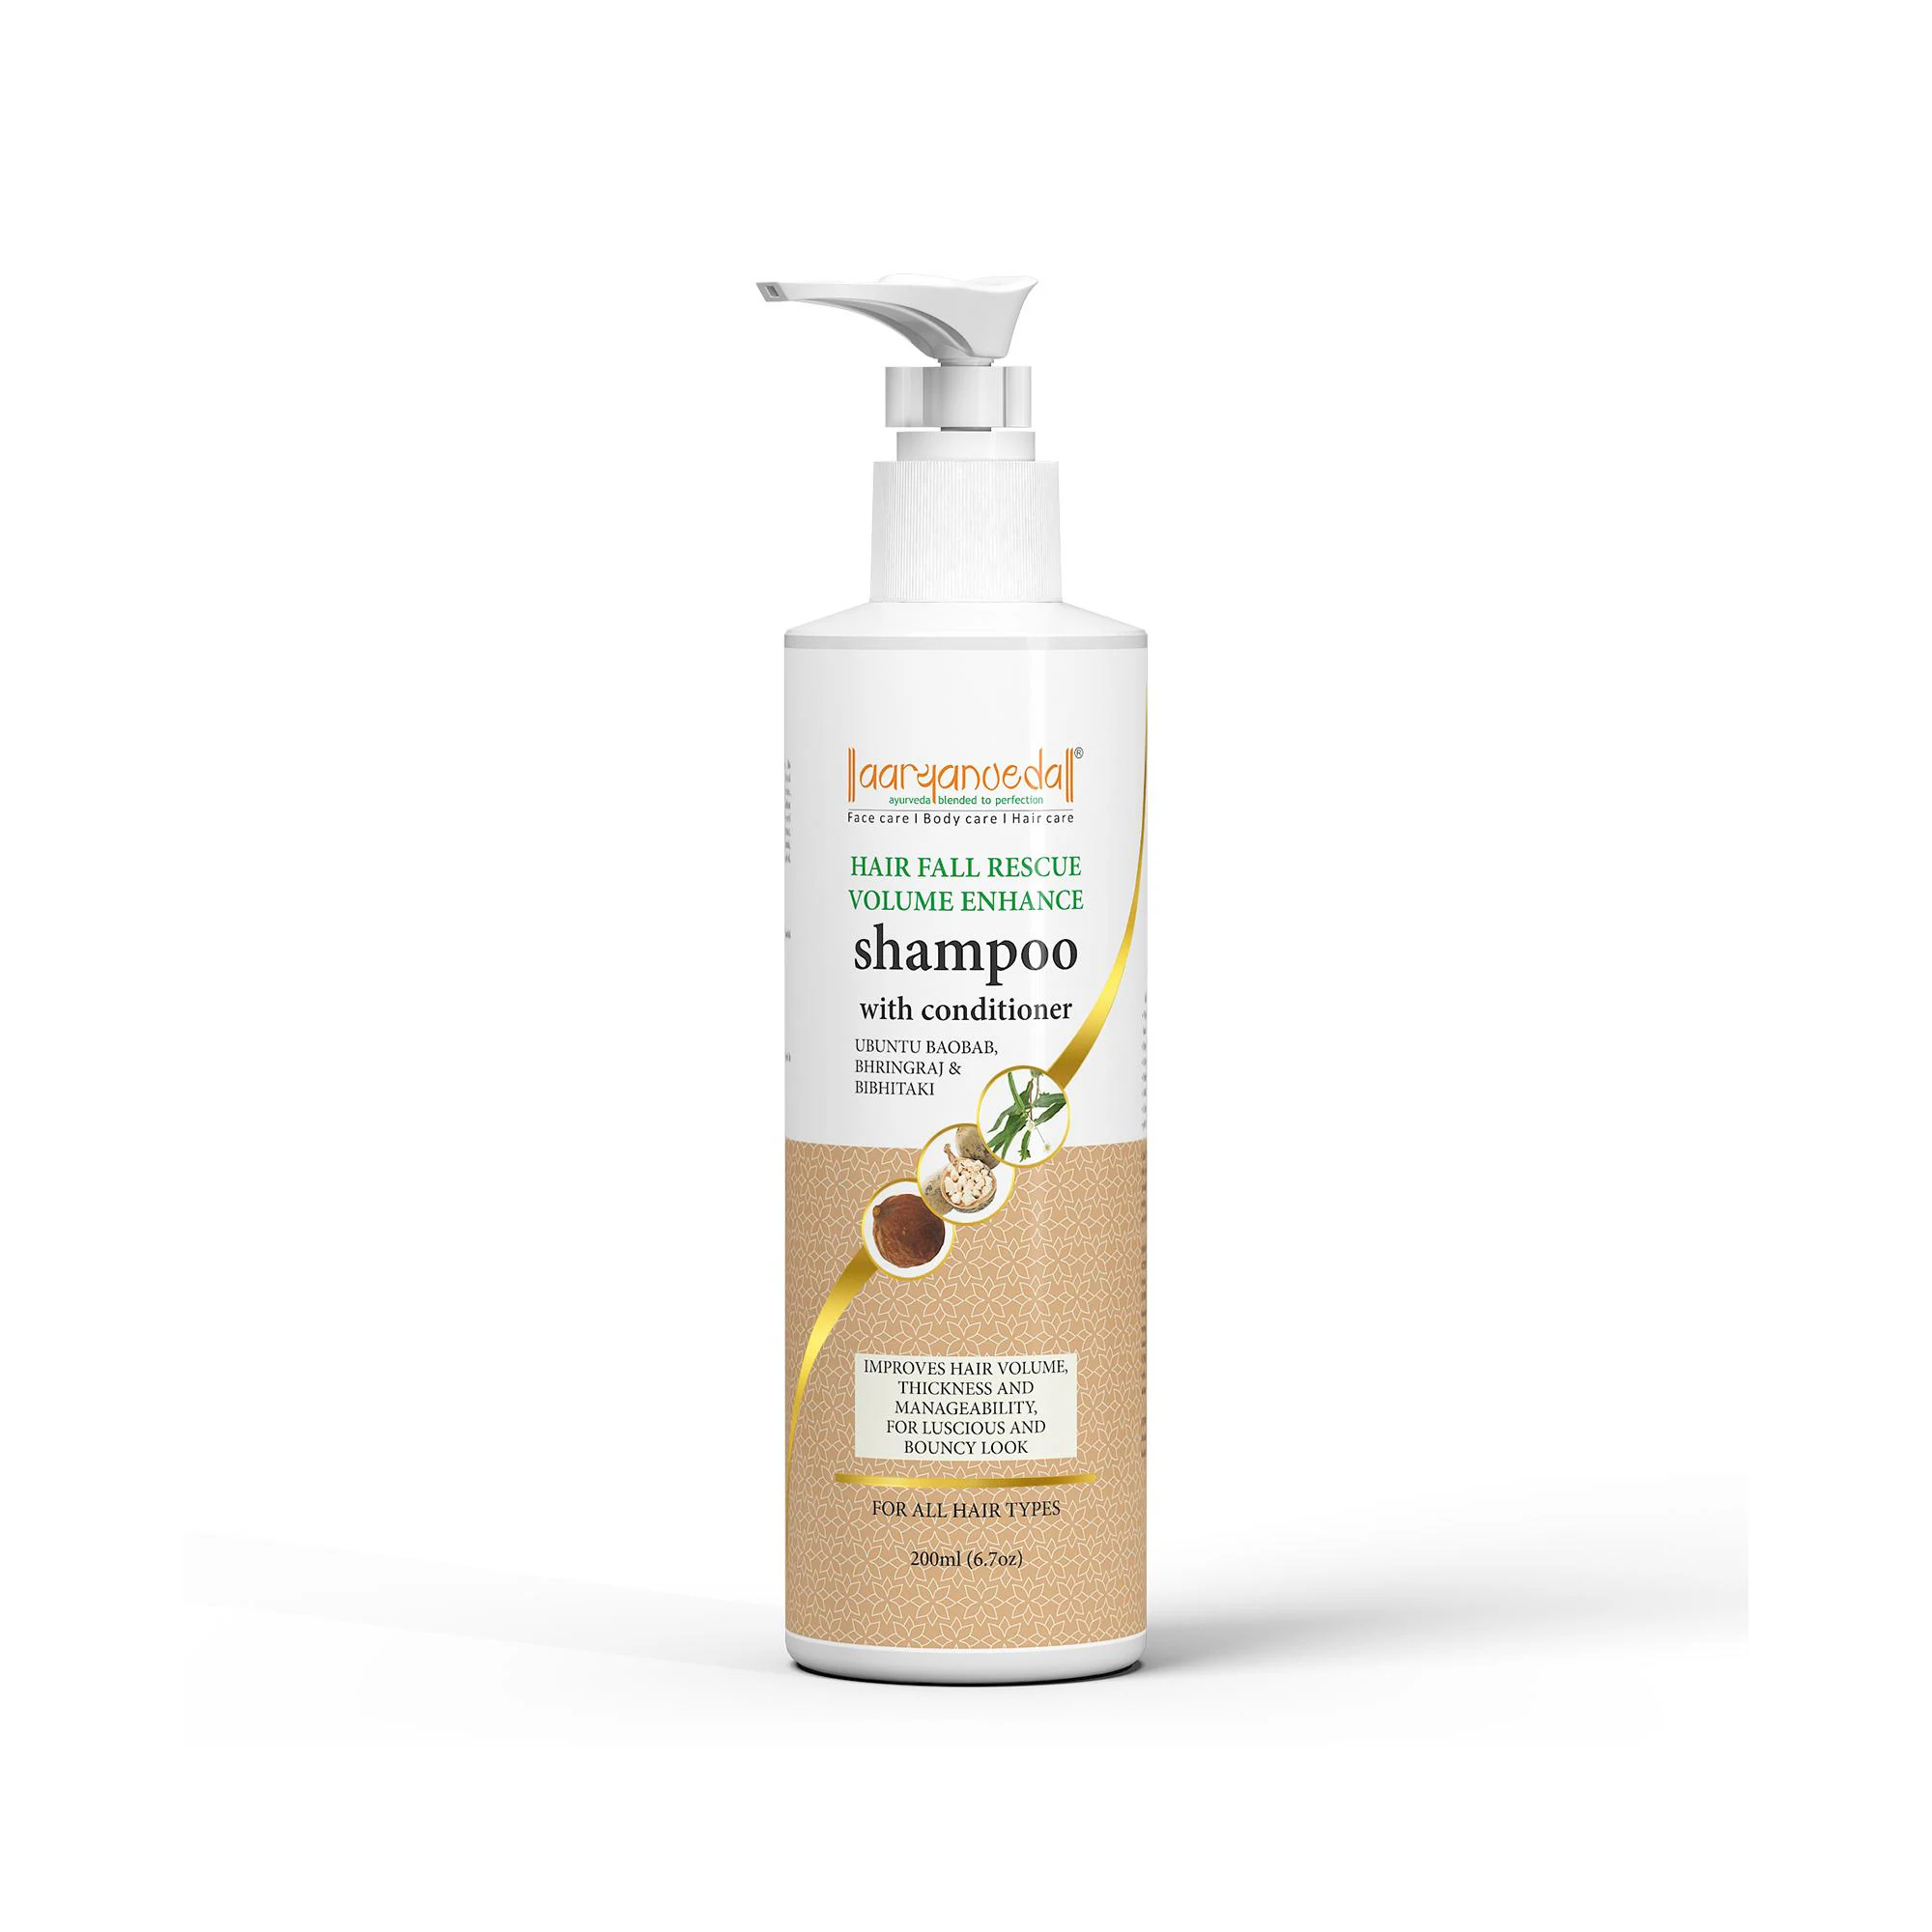 Aryanveda Hair Fall Rescue Volume Enhance Shampoo with Conditioner, Ubuntu  Baobab, Bhringraj and Bibhitaki for All Hair Types, 200 ml - JioMart